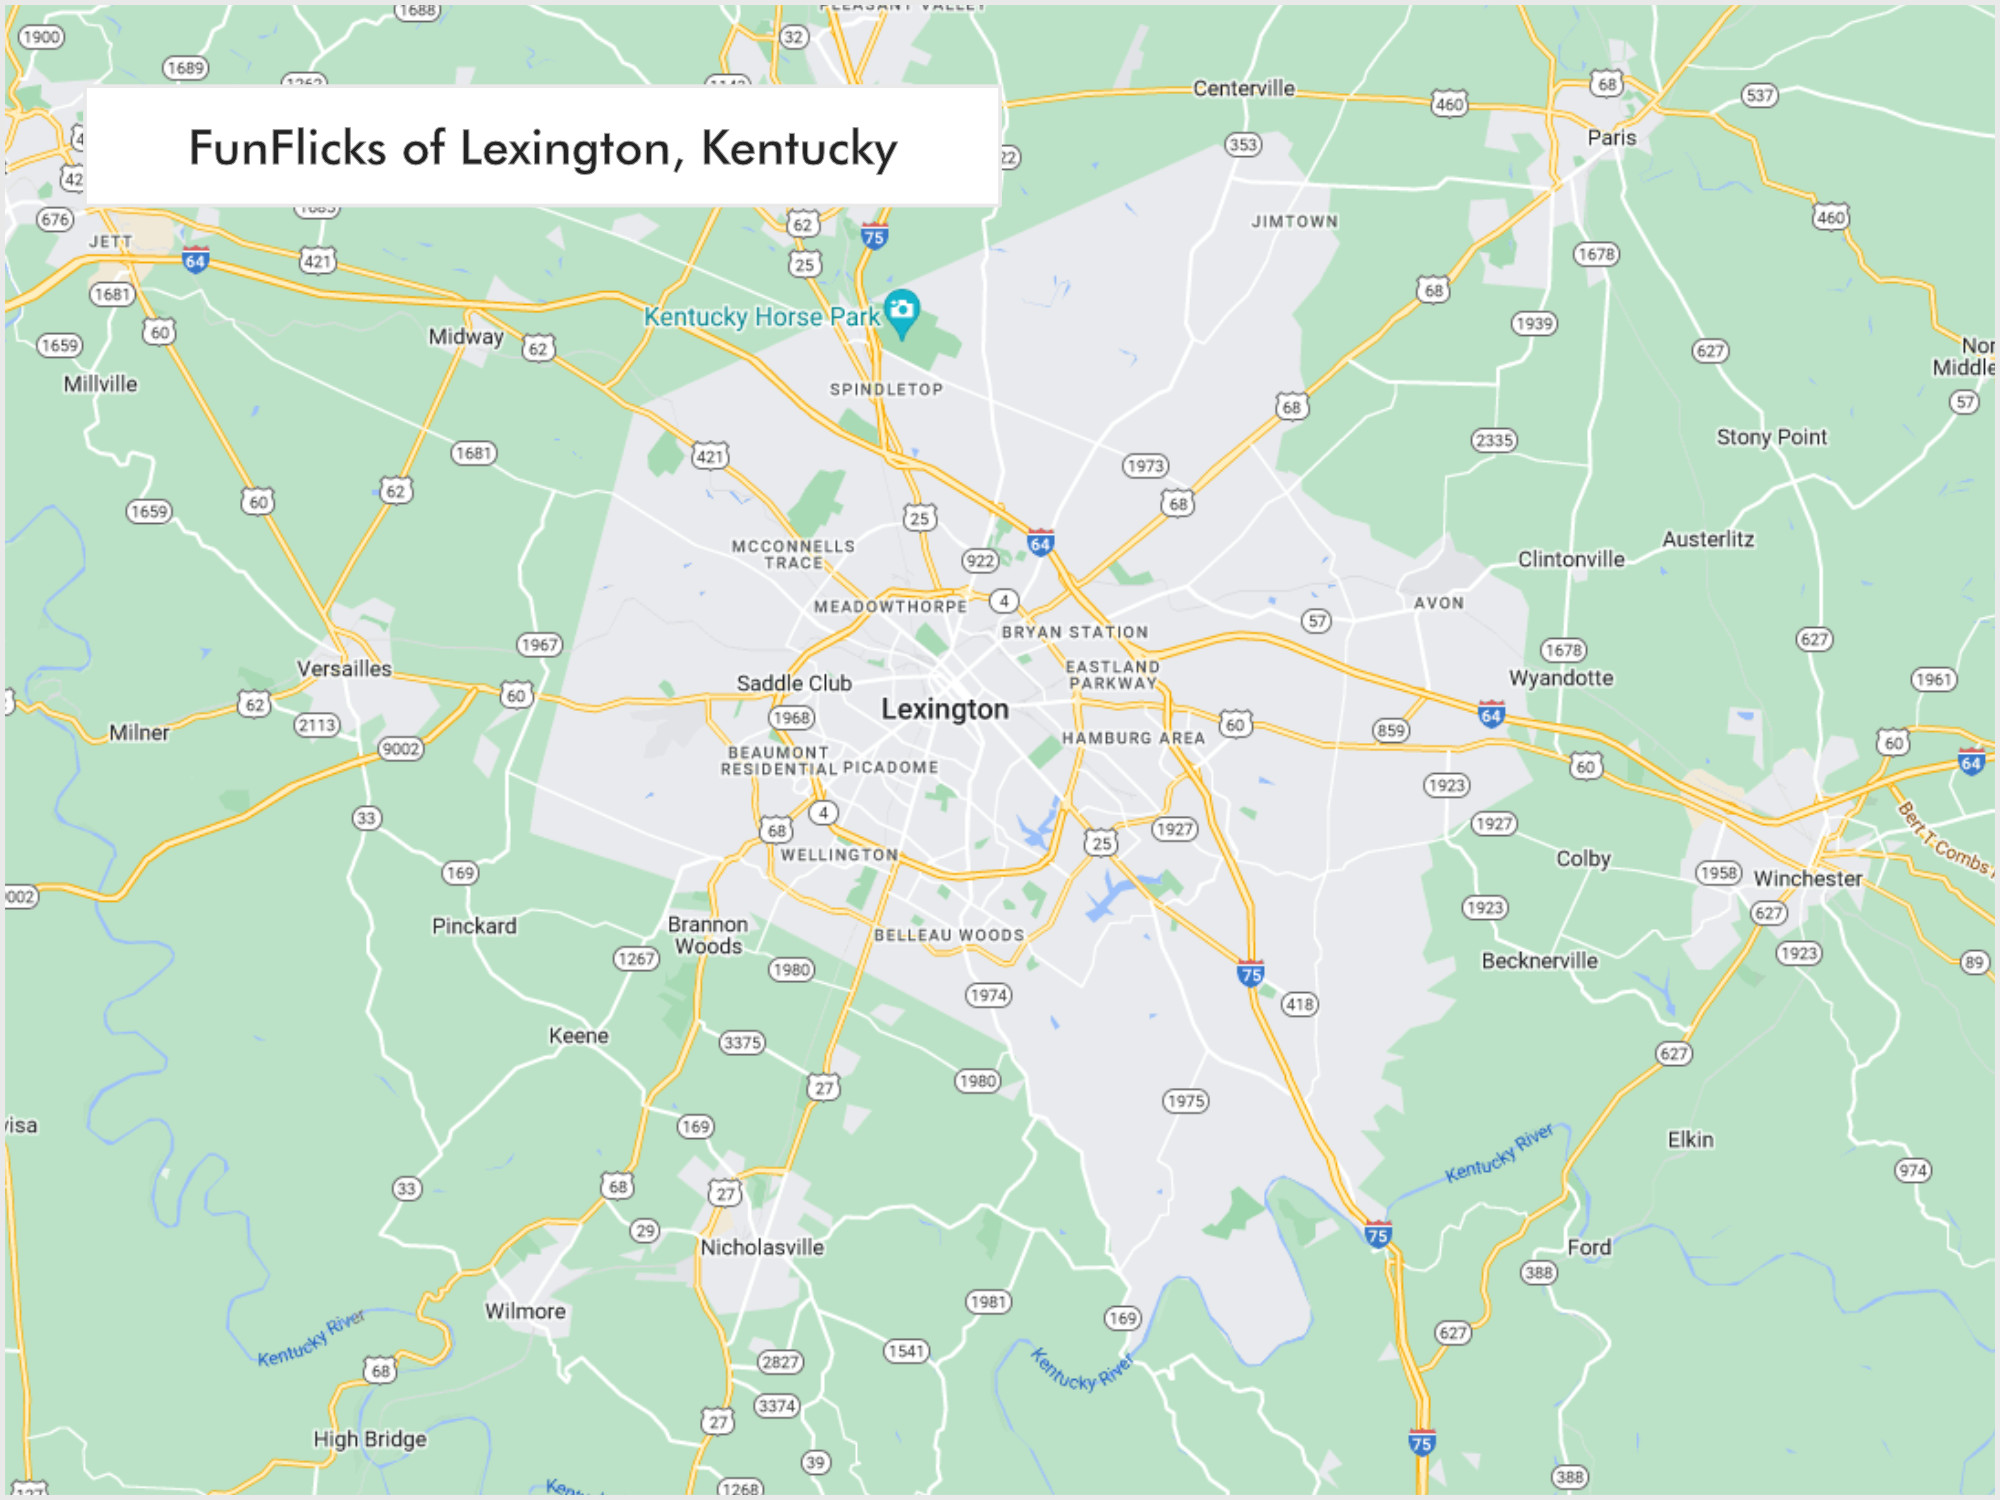 FunFlicks® Lexington territory map